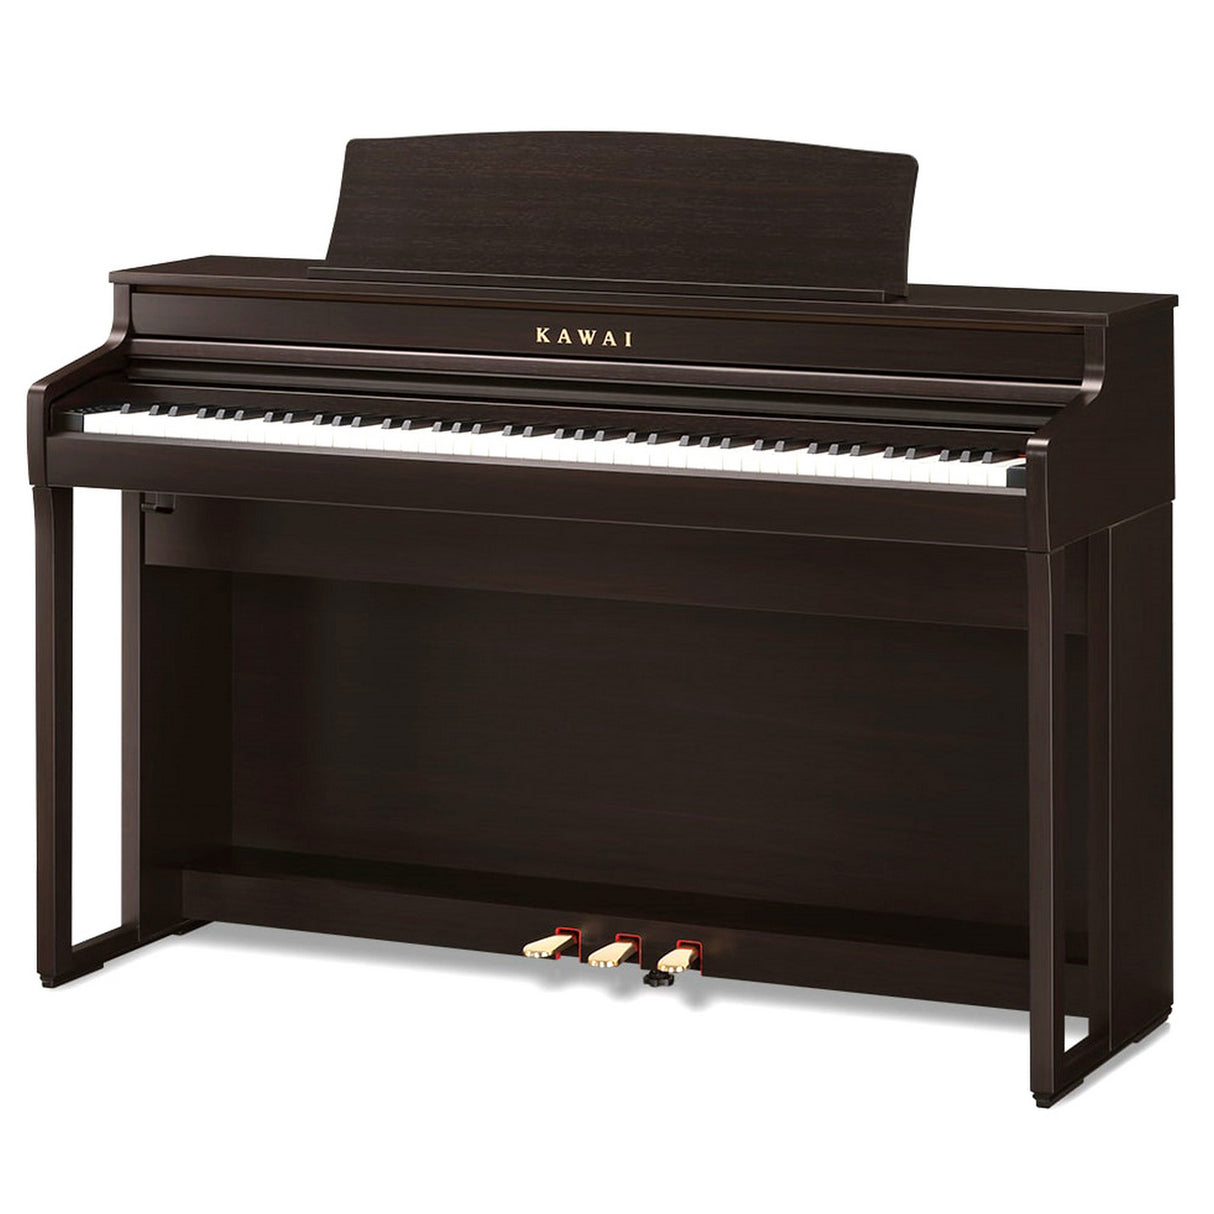 Kawai CA401 88-Key Digital Piano with Bench, Rosewood